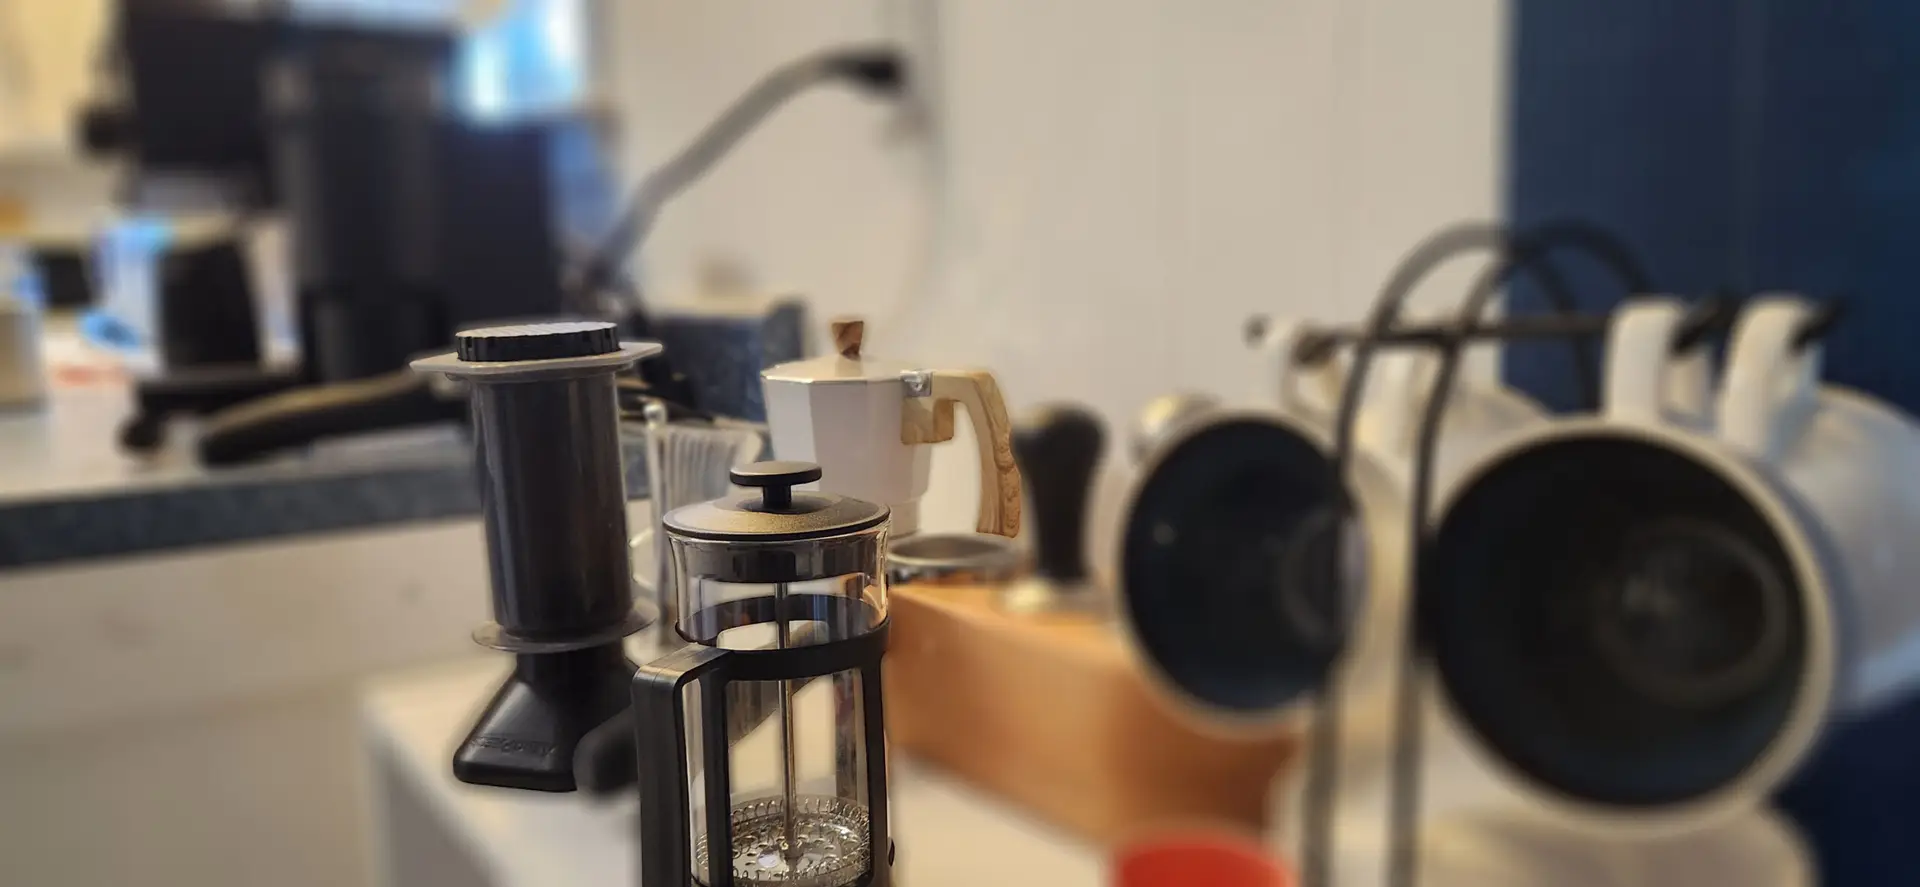 alternative espresso brewing methods